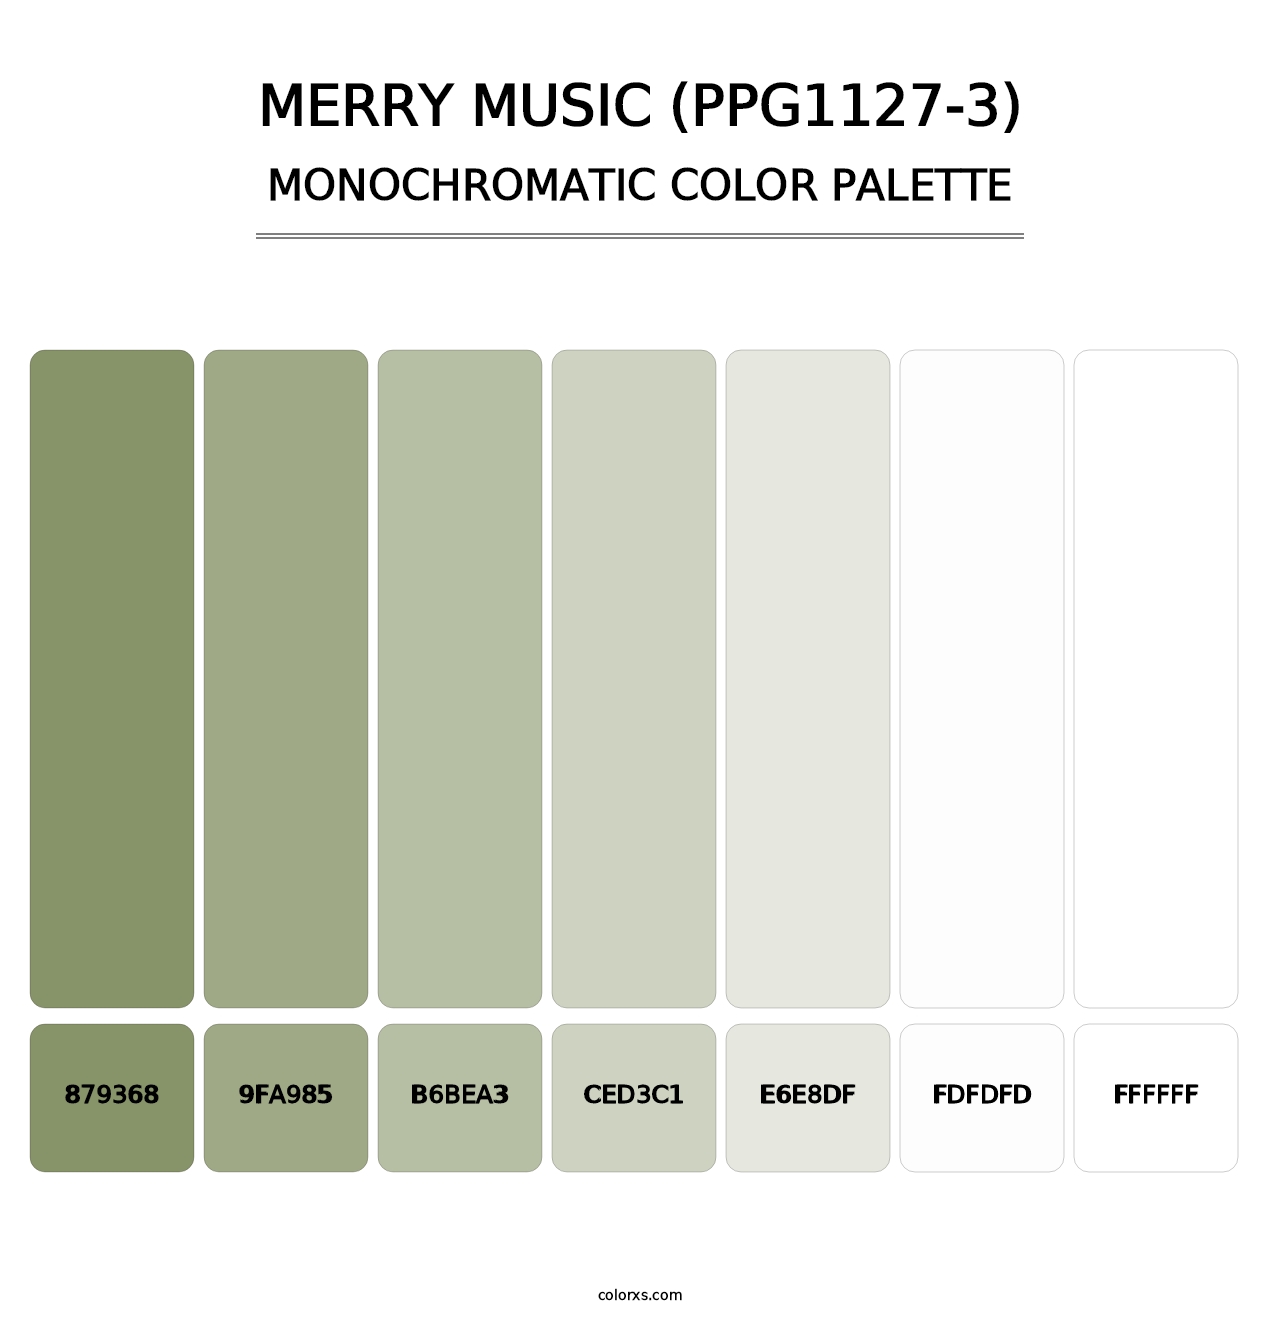 Merry Music (PPG1127-3) - Monochromatic Color Palette